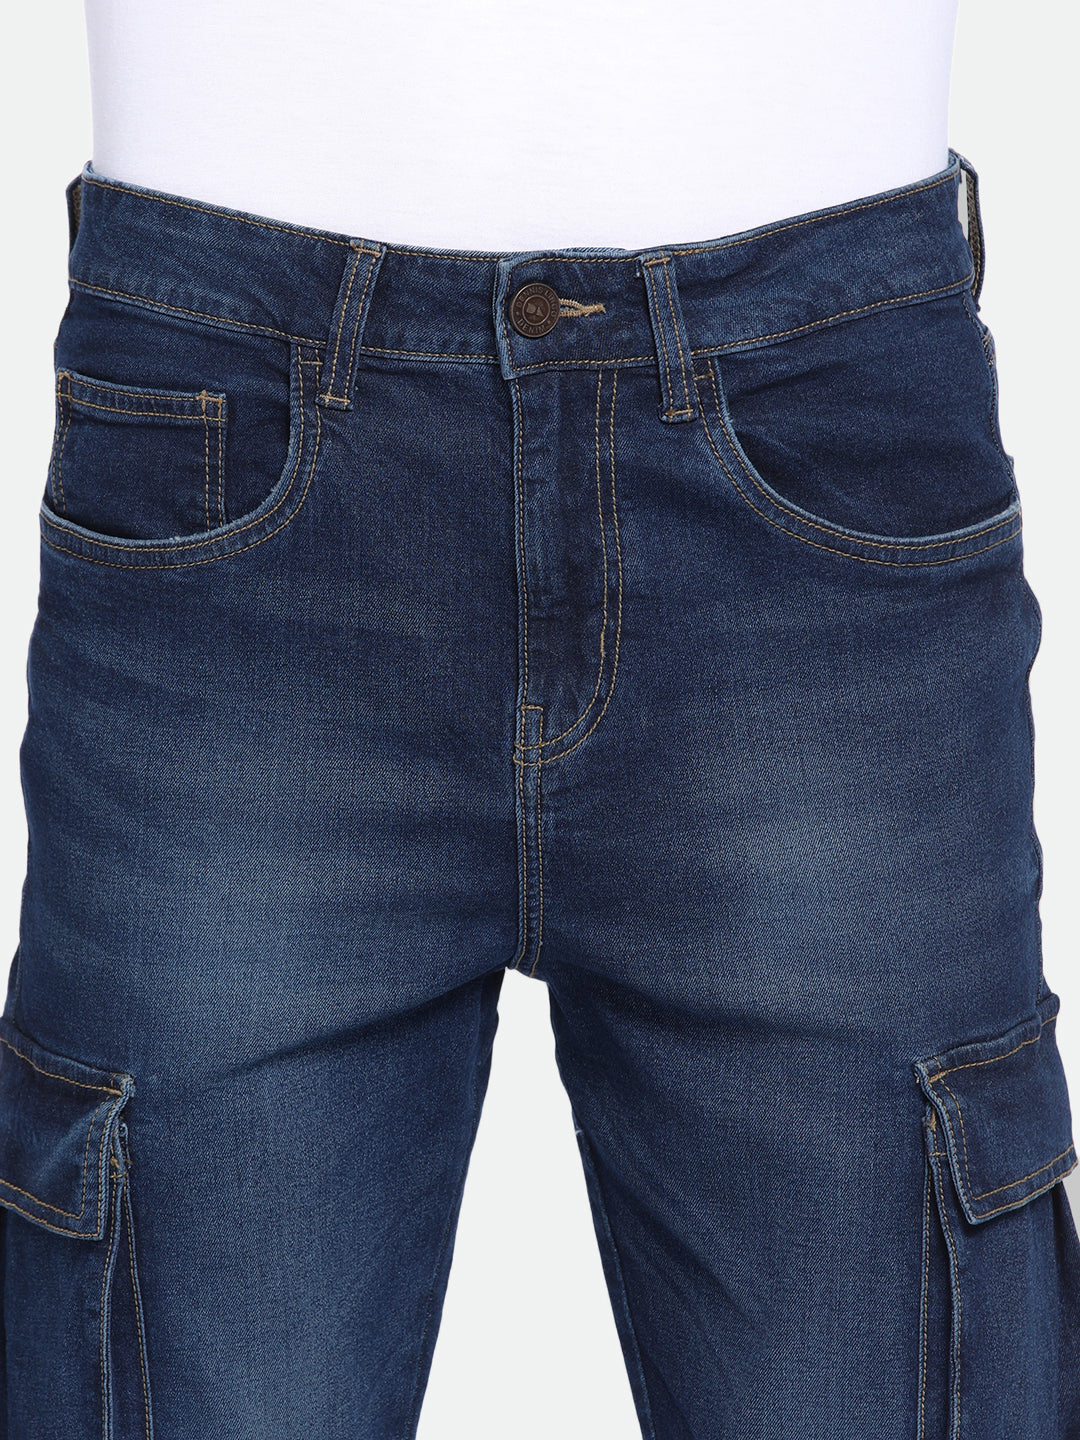 Dennis Lingo Mens's Dark Blue Solid Jeans